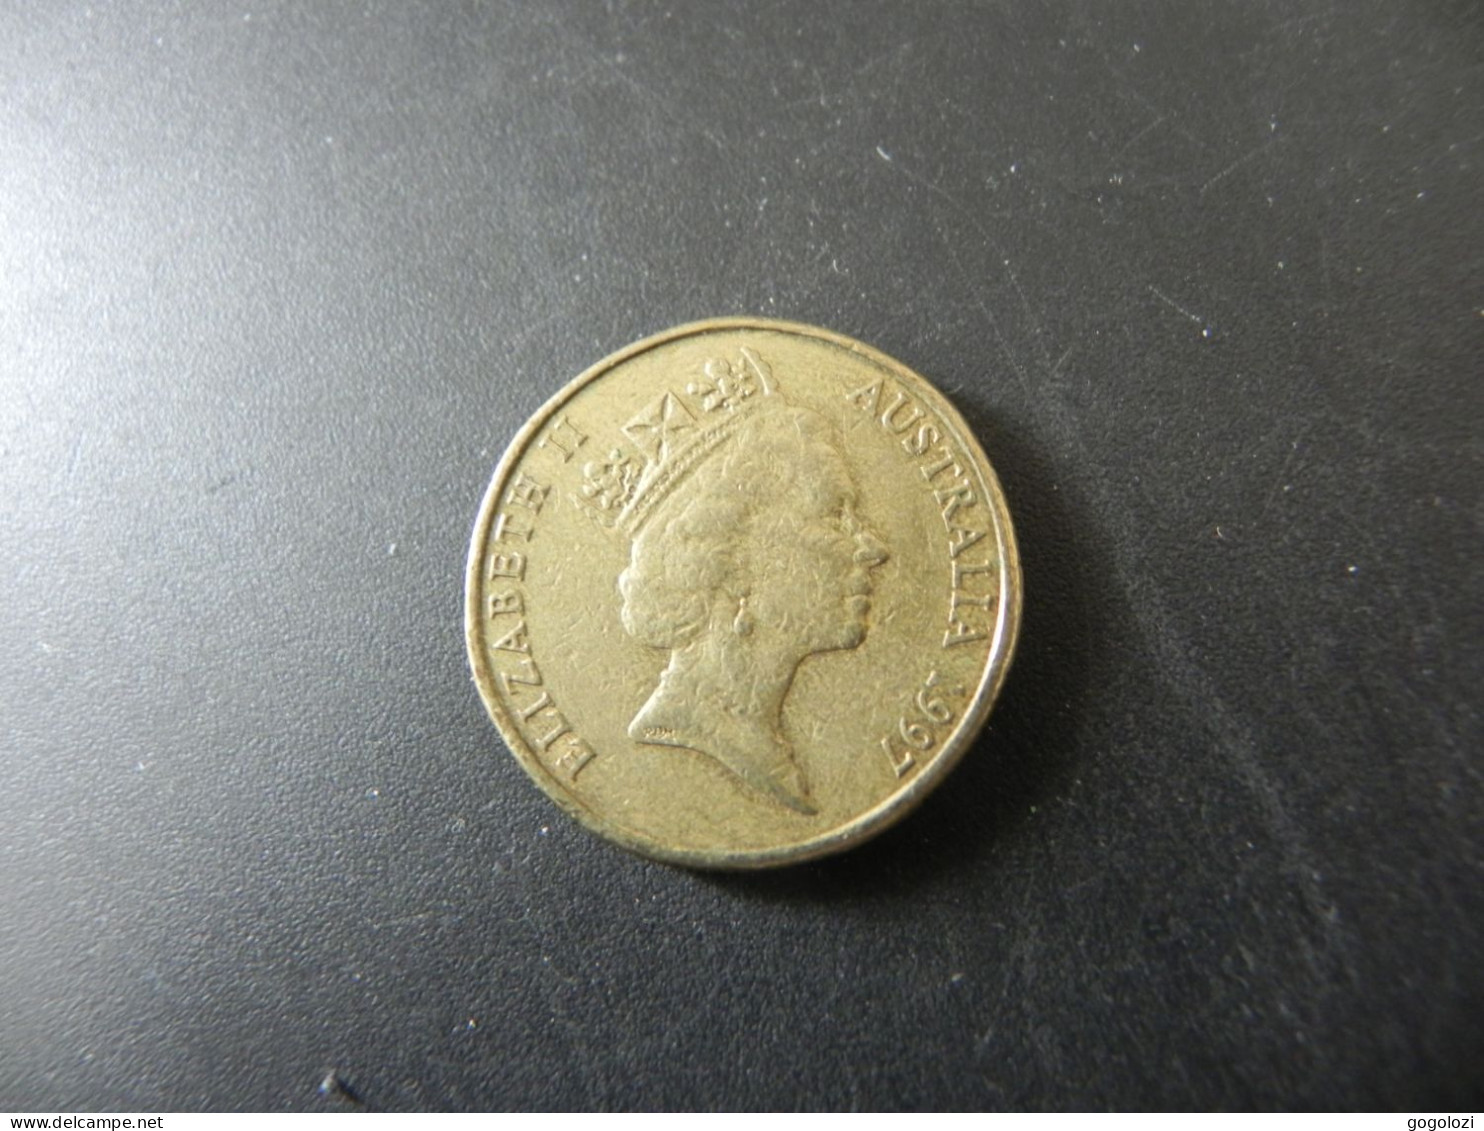 Australia 1 Dollar 1997 - Sir Charles Kingsford Smith - Dollar